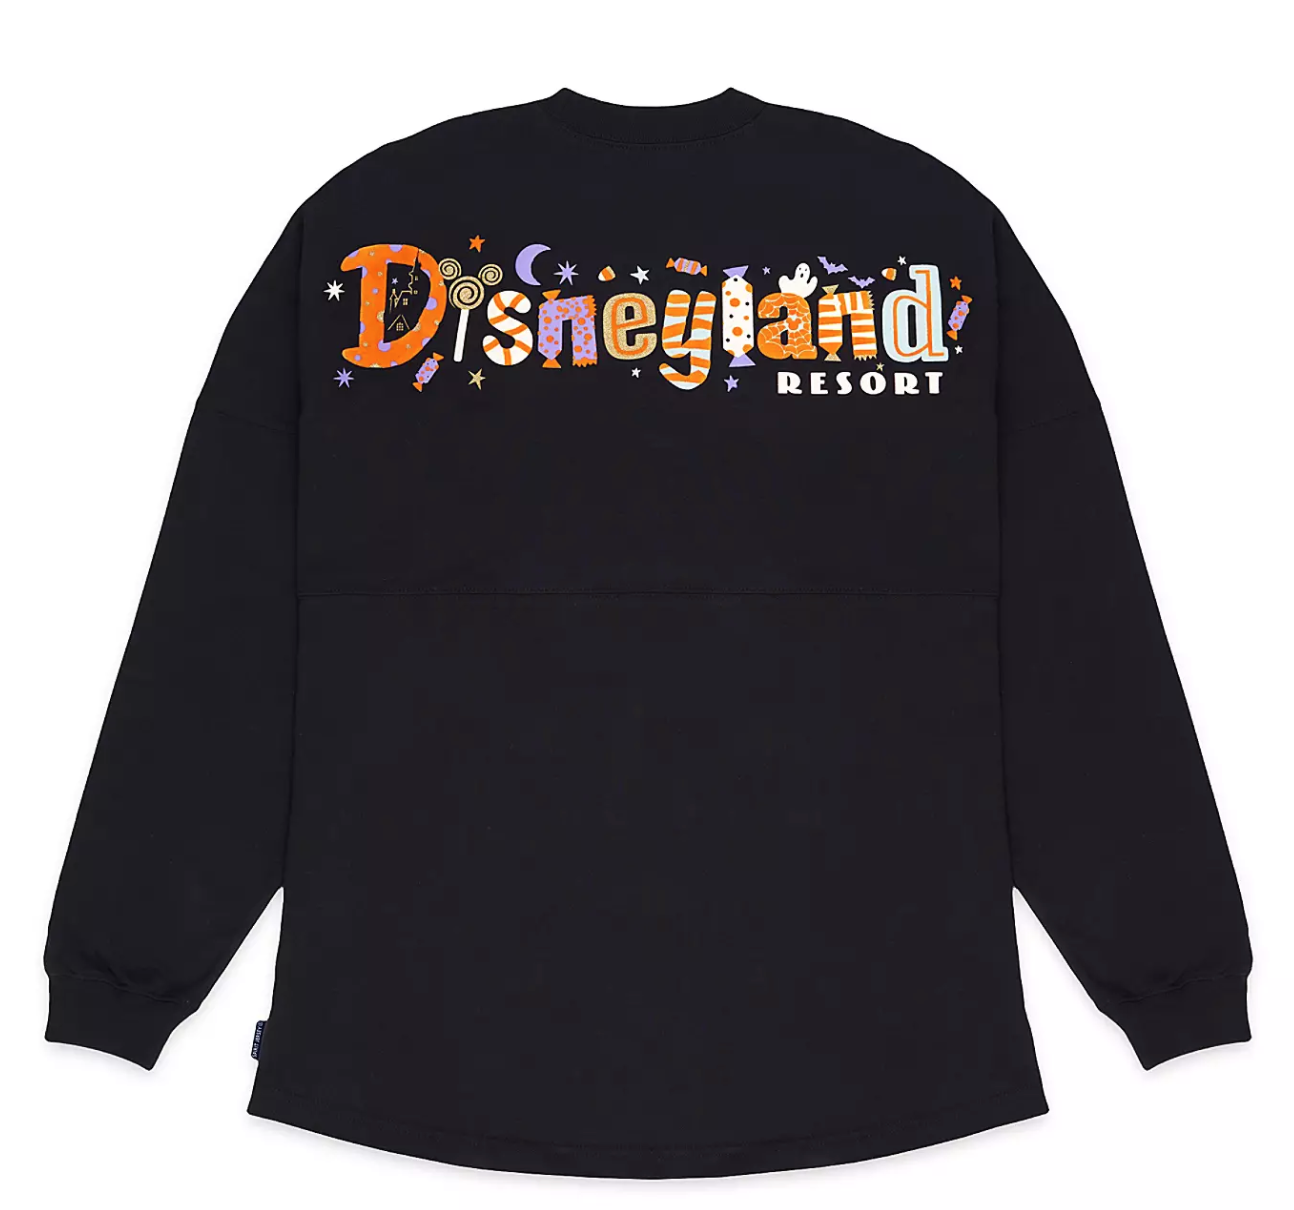 TrickorTreat! Disney's 2020 Halloween Spirit Jerseys Have Arrived